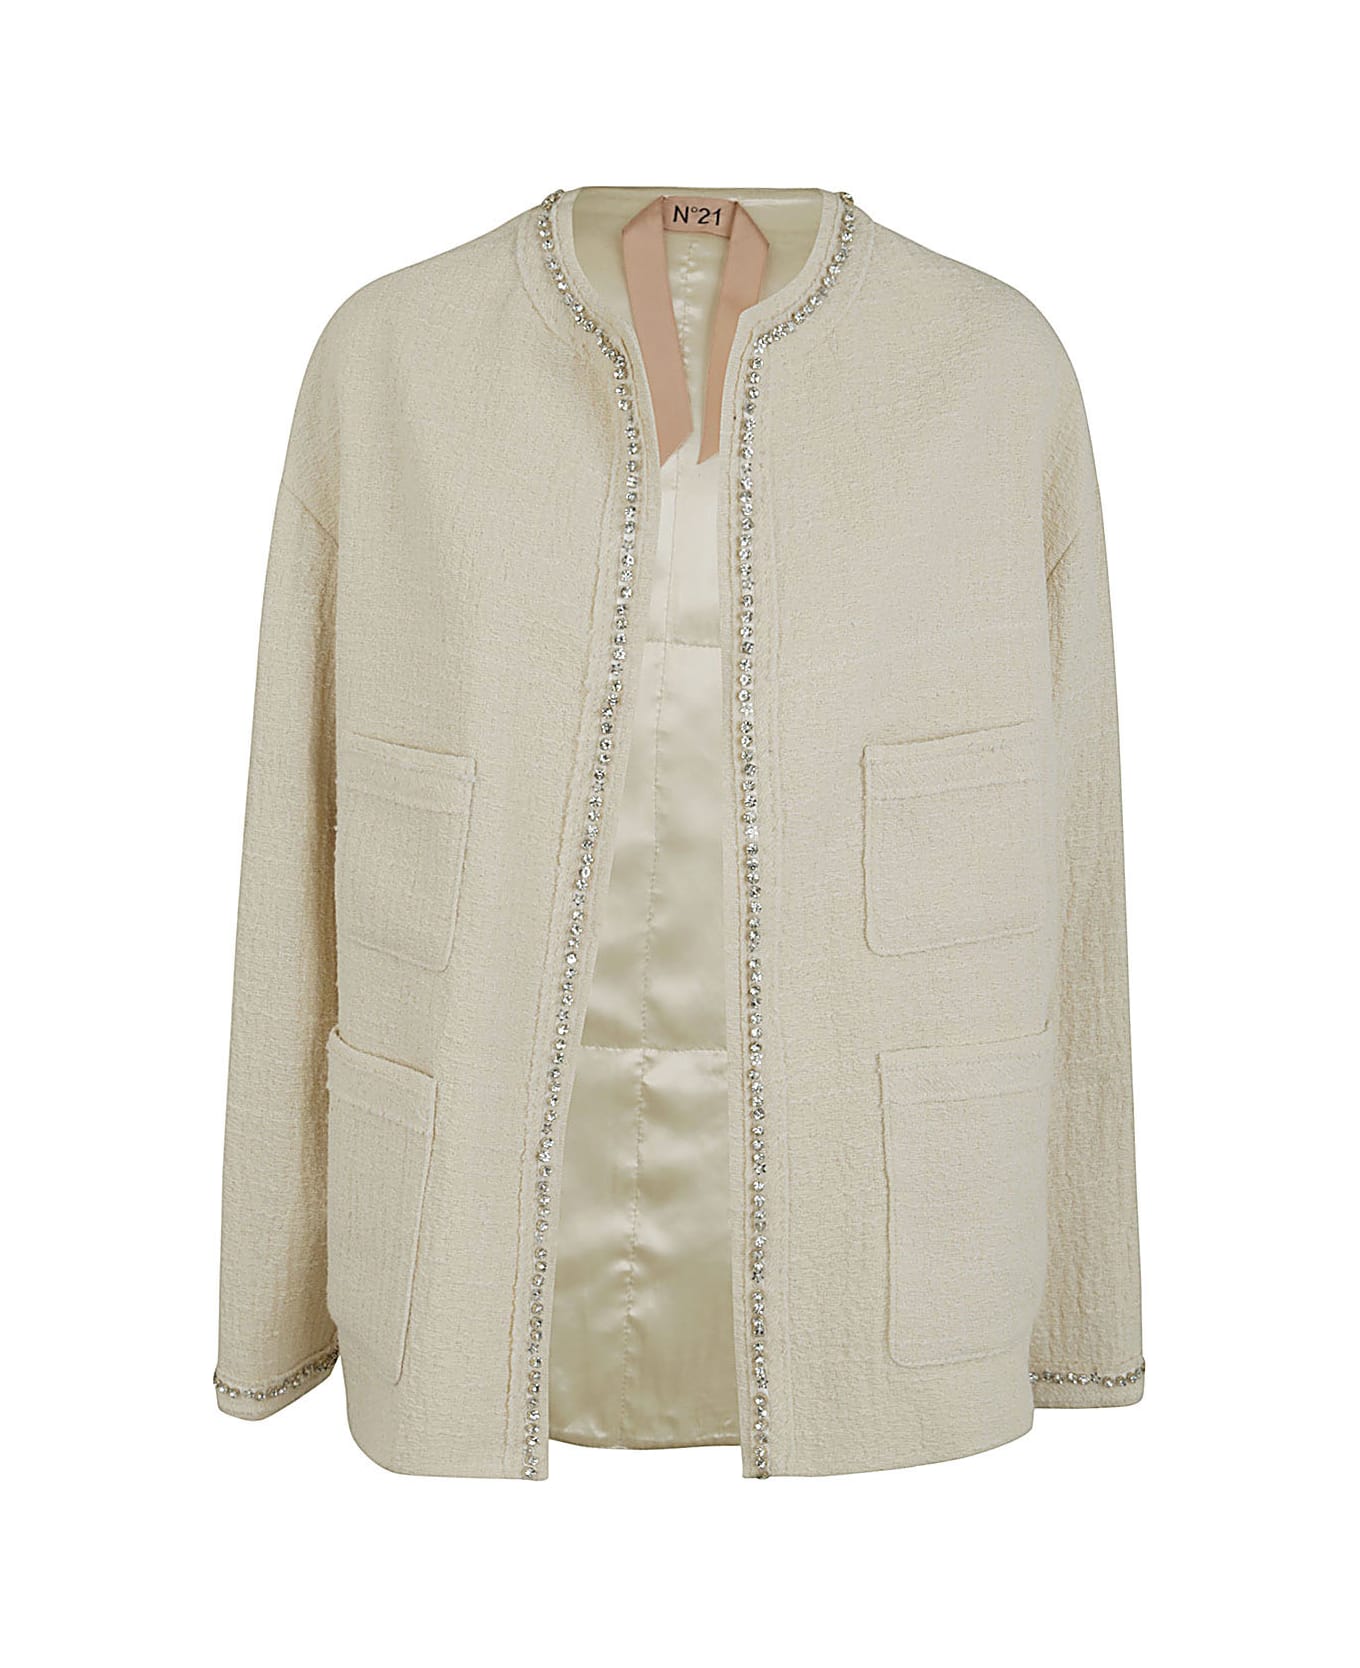 N.21 Oversize Tweed Jacket - Ecru